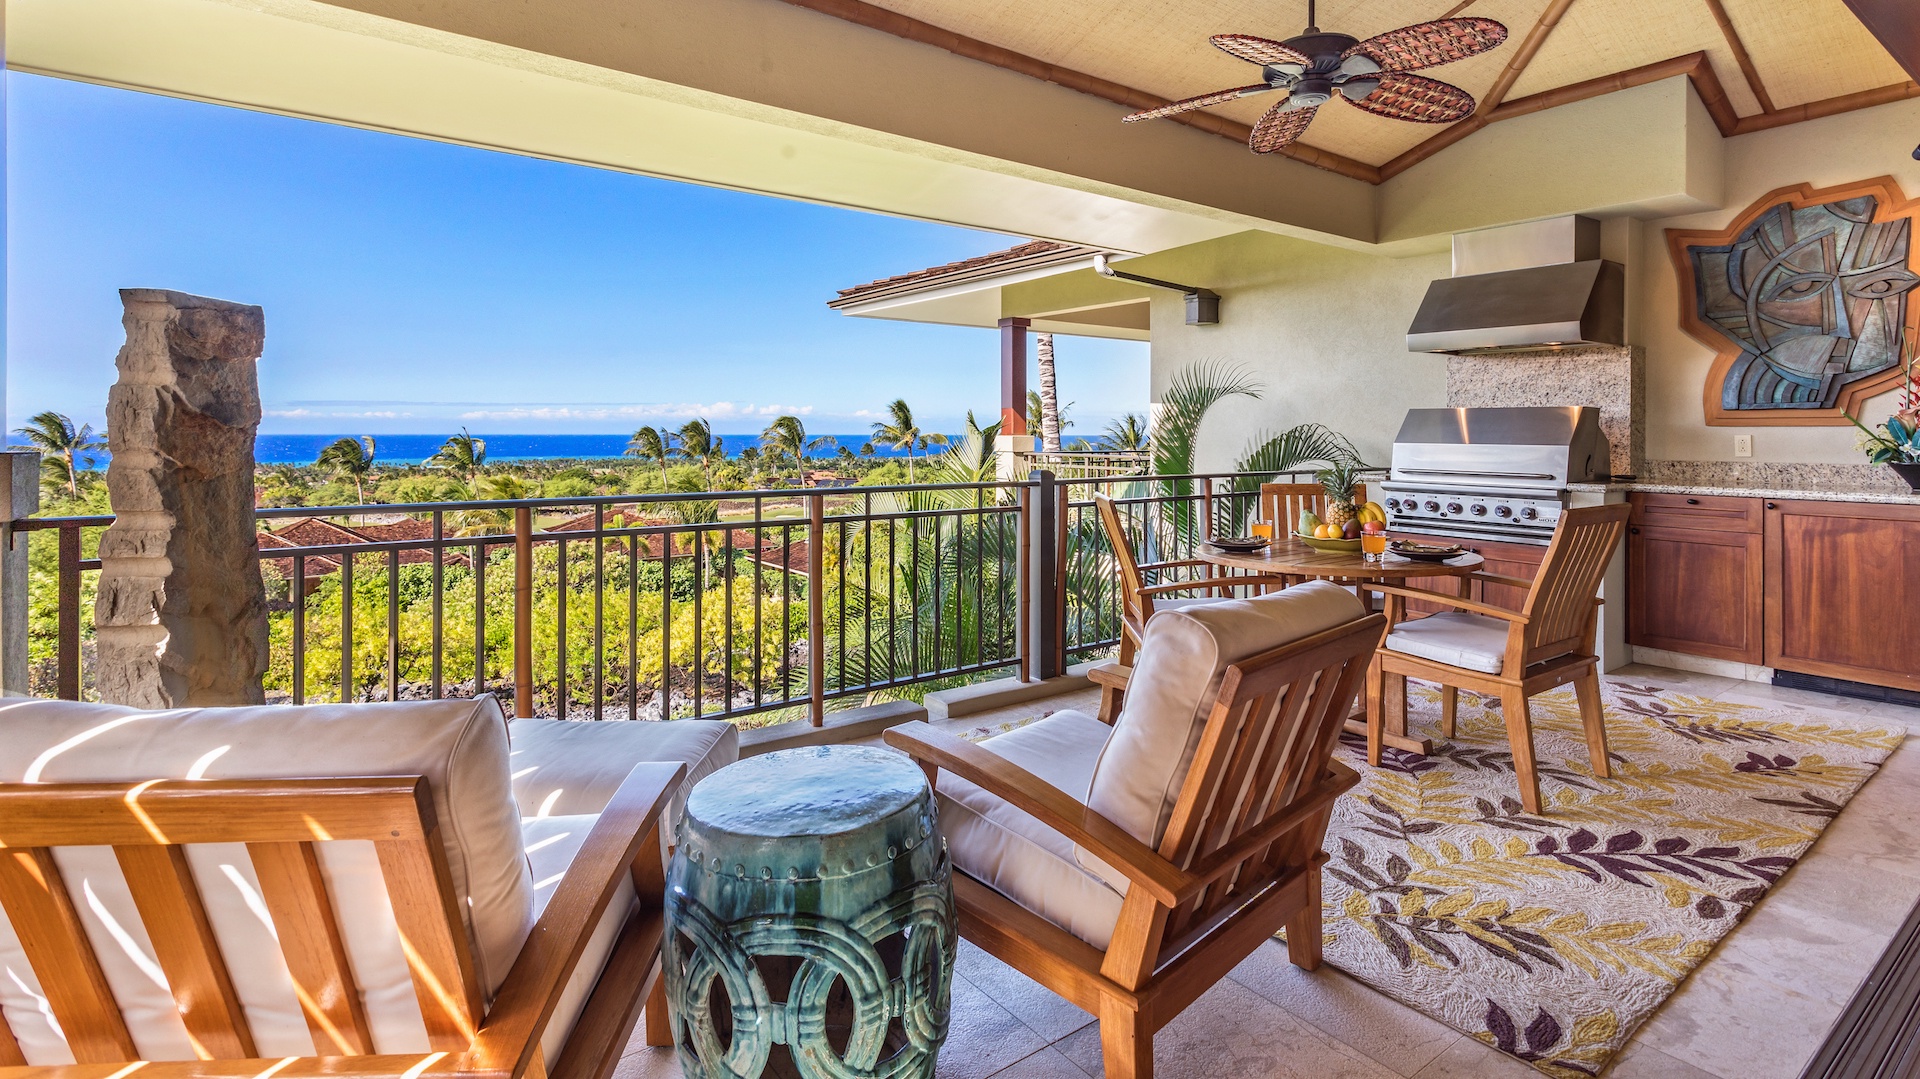 Kailua Kona Vacation Rentals, 2BD Hainoa Villa (2907B) at Four Seasons Resort at Hualalai - Ocean & Sunset Views from the Generous Lanai with Plush Chairs, Dining Area & BBQ Grill.